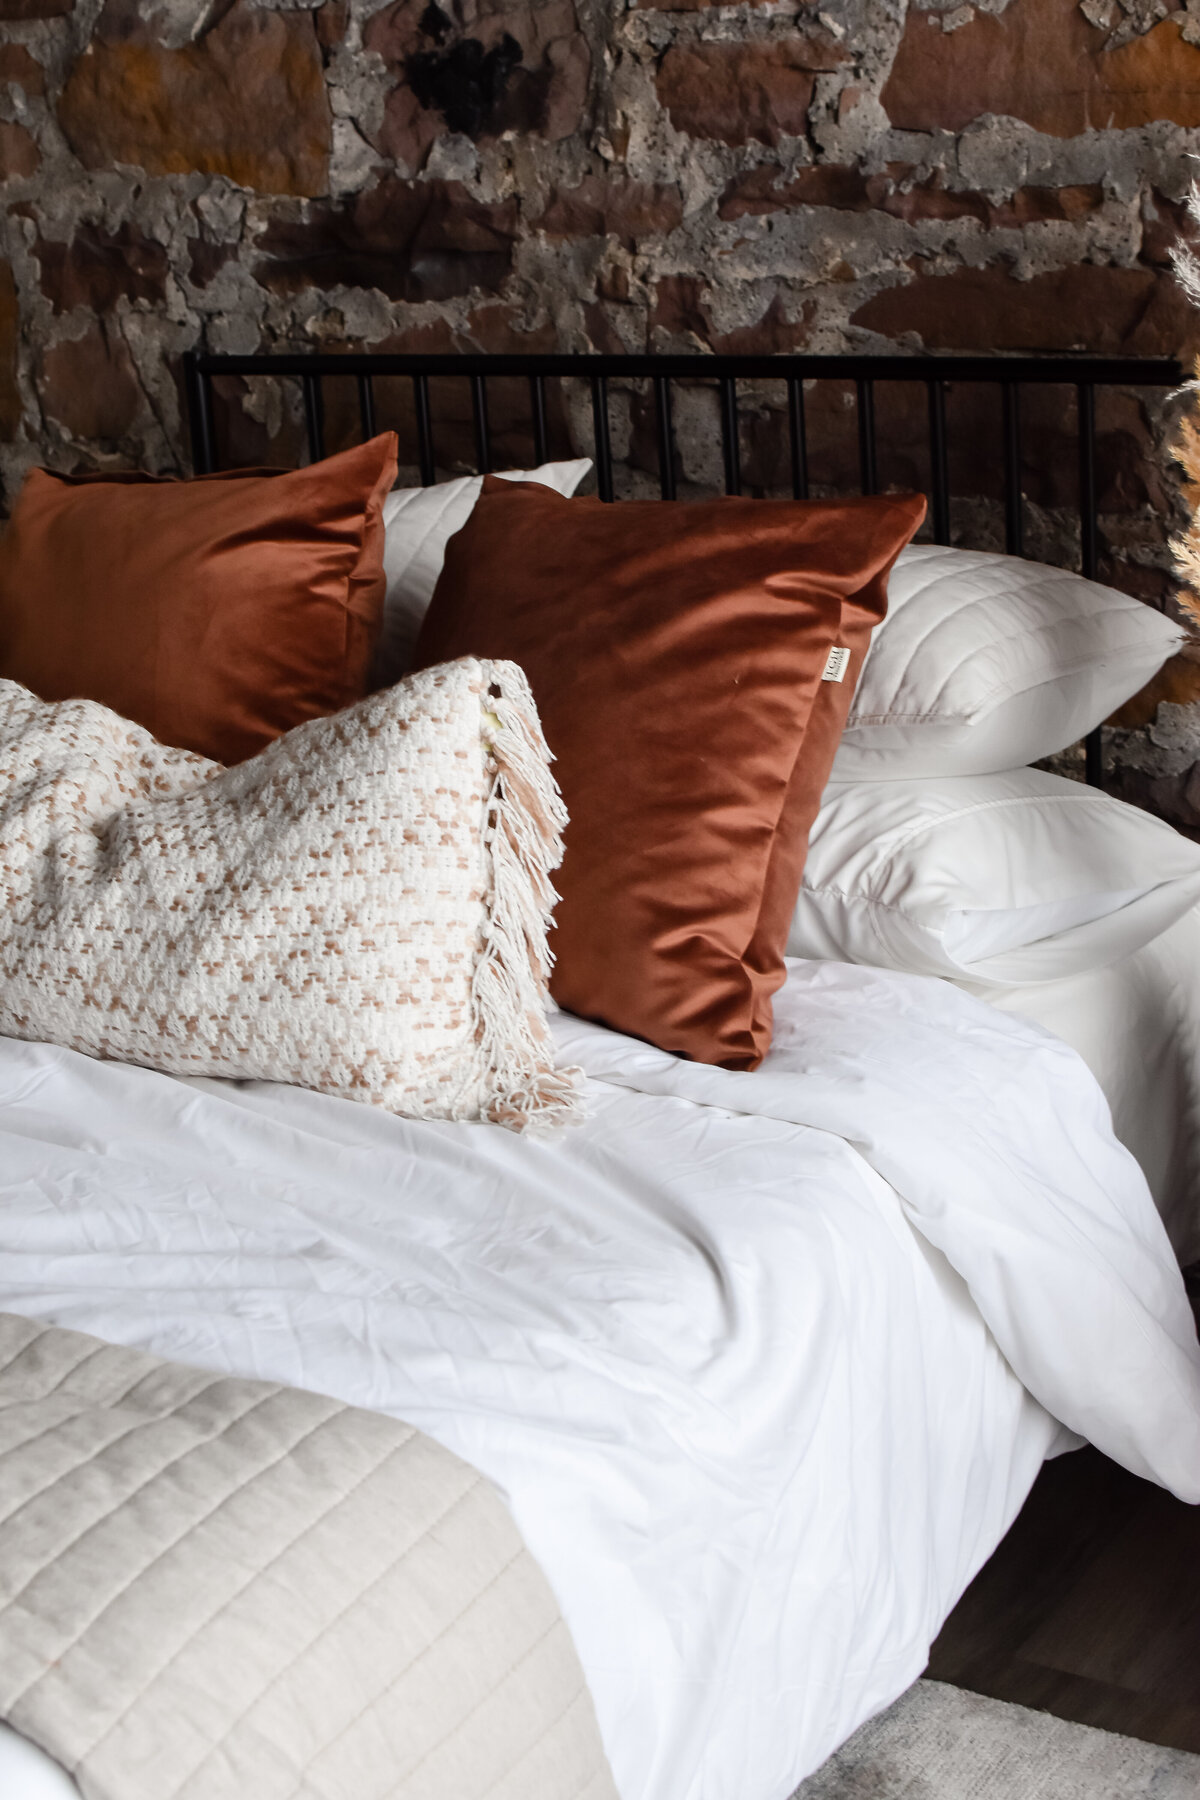 Two orange velvet pillows sit on a plush bed